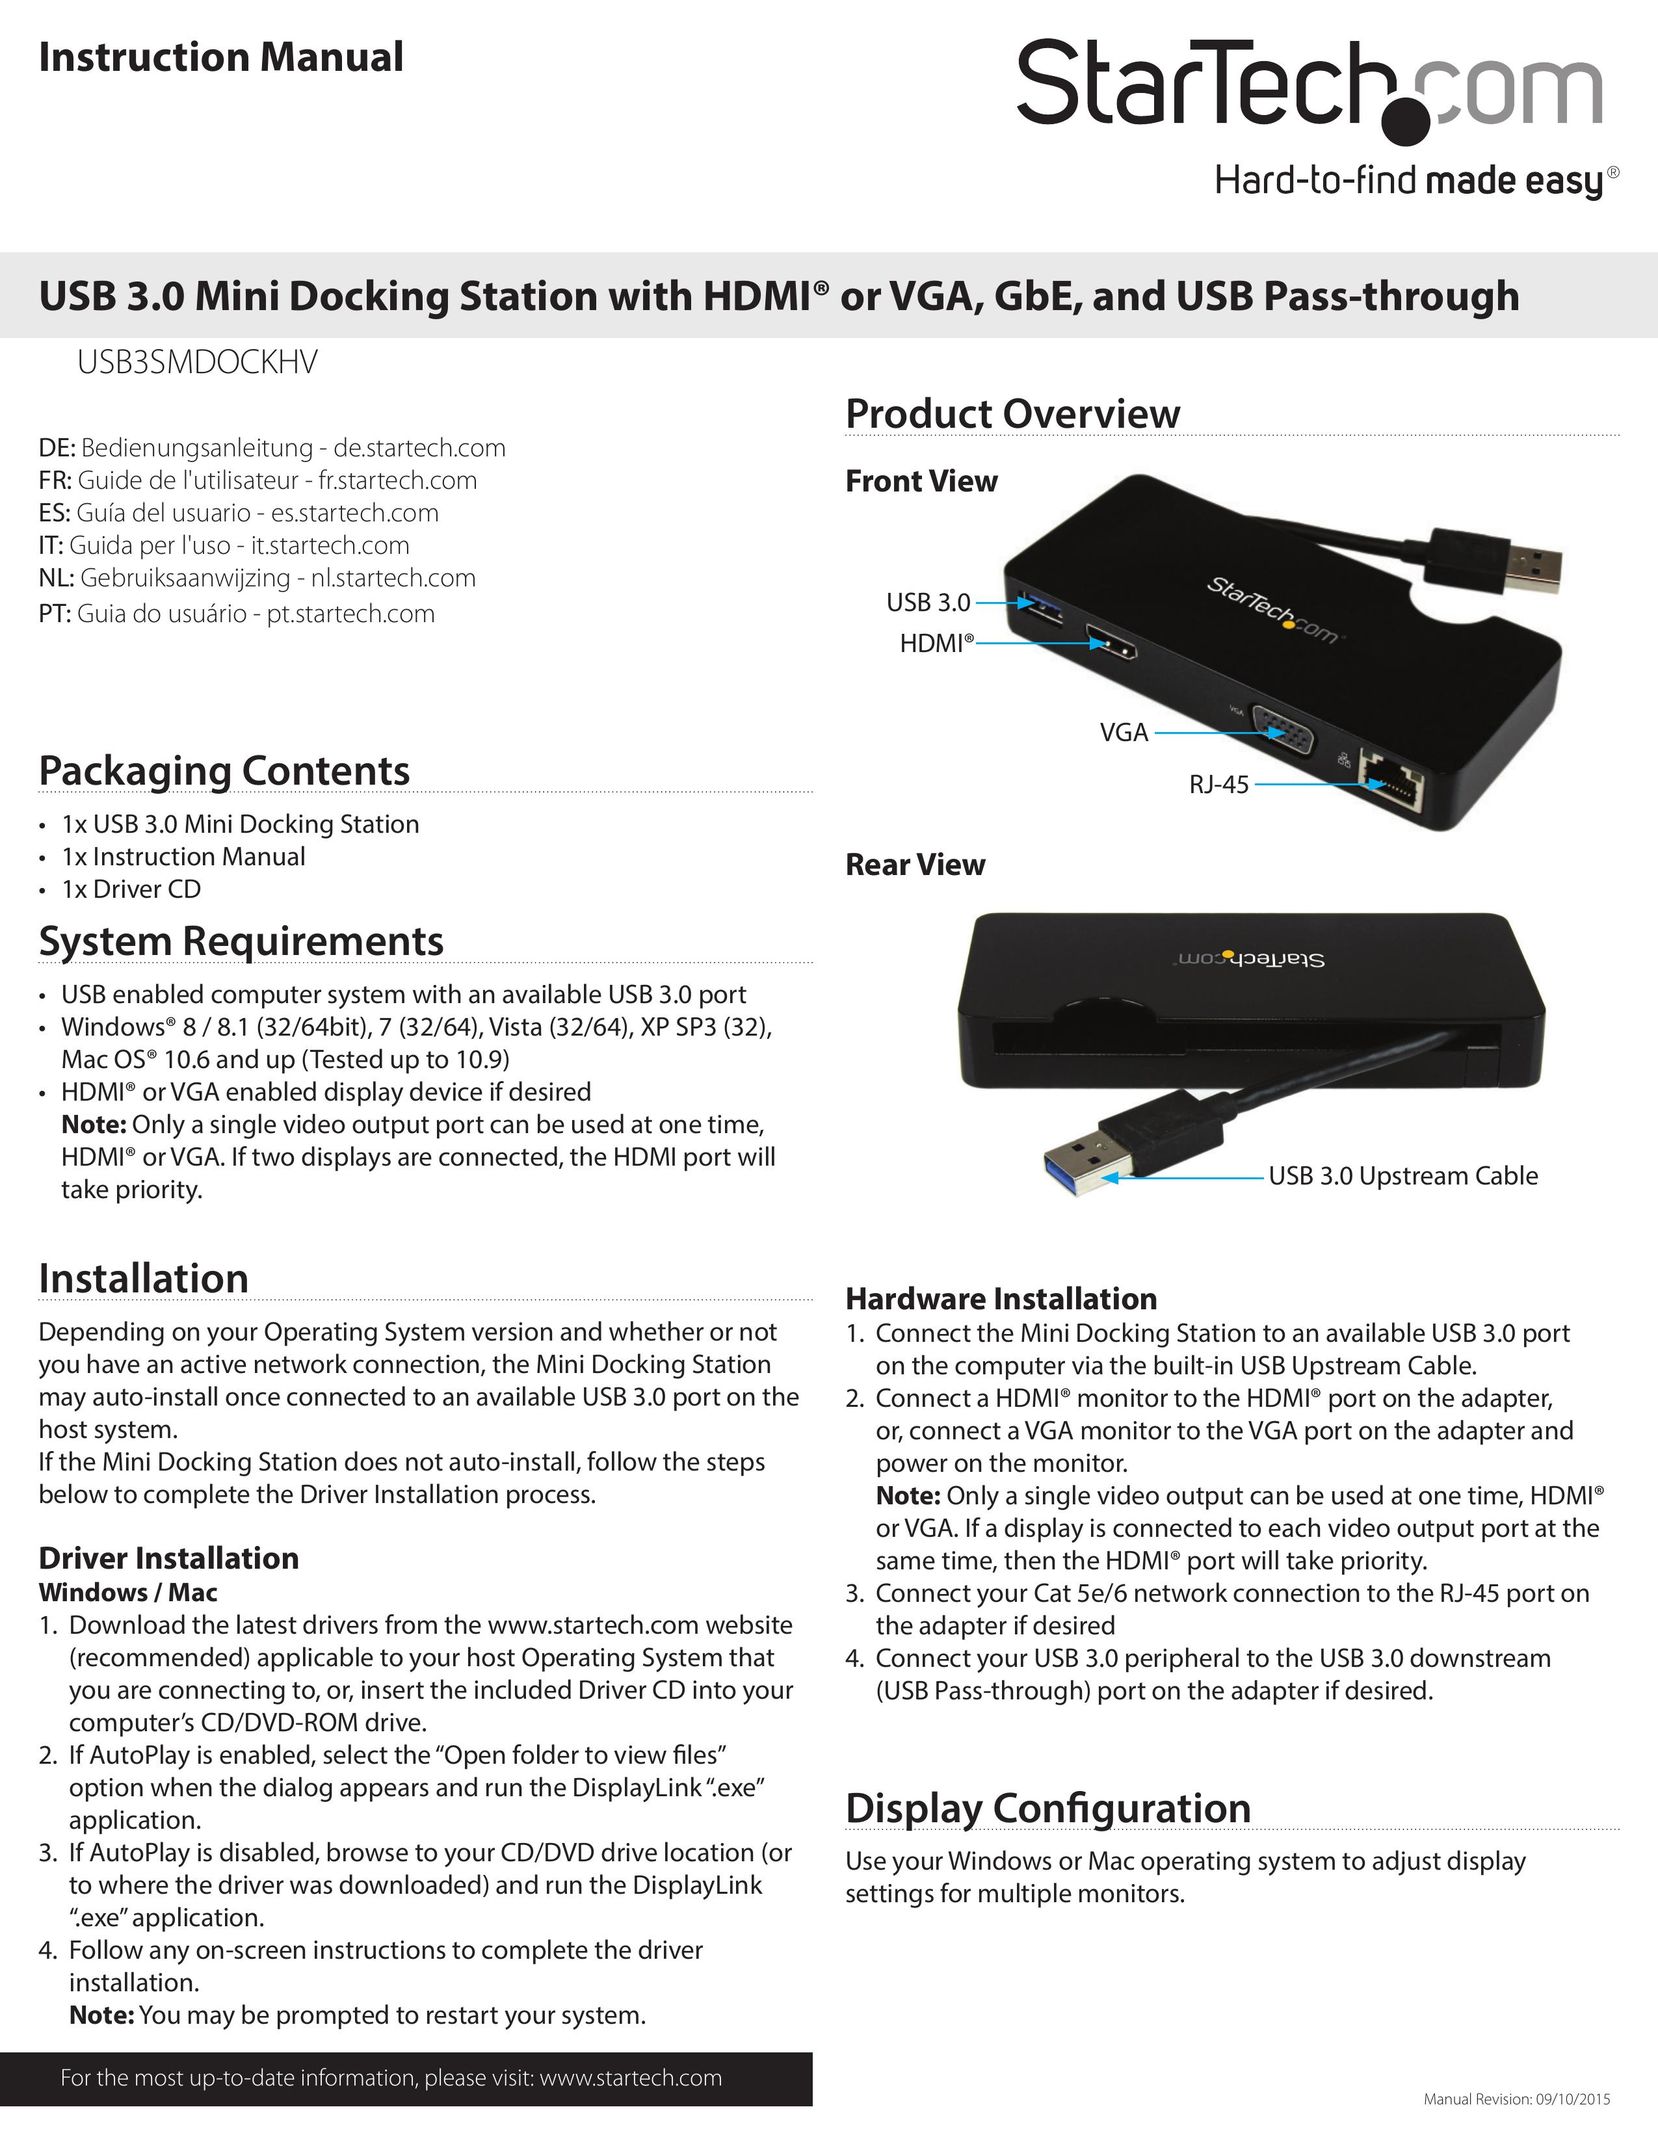 StarTech.com USB3SMDOCKHV Laptop Docking Station User Manual